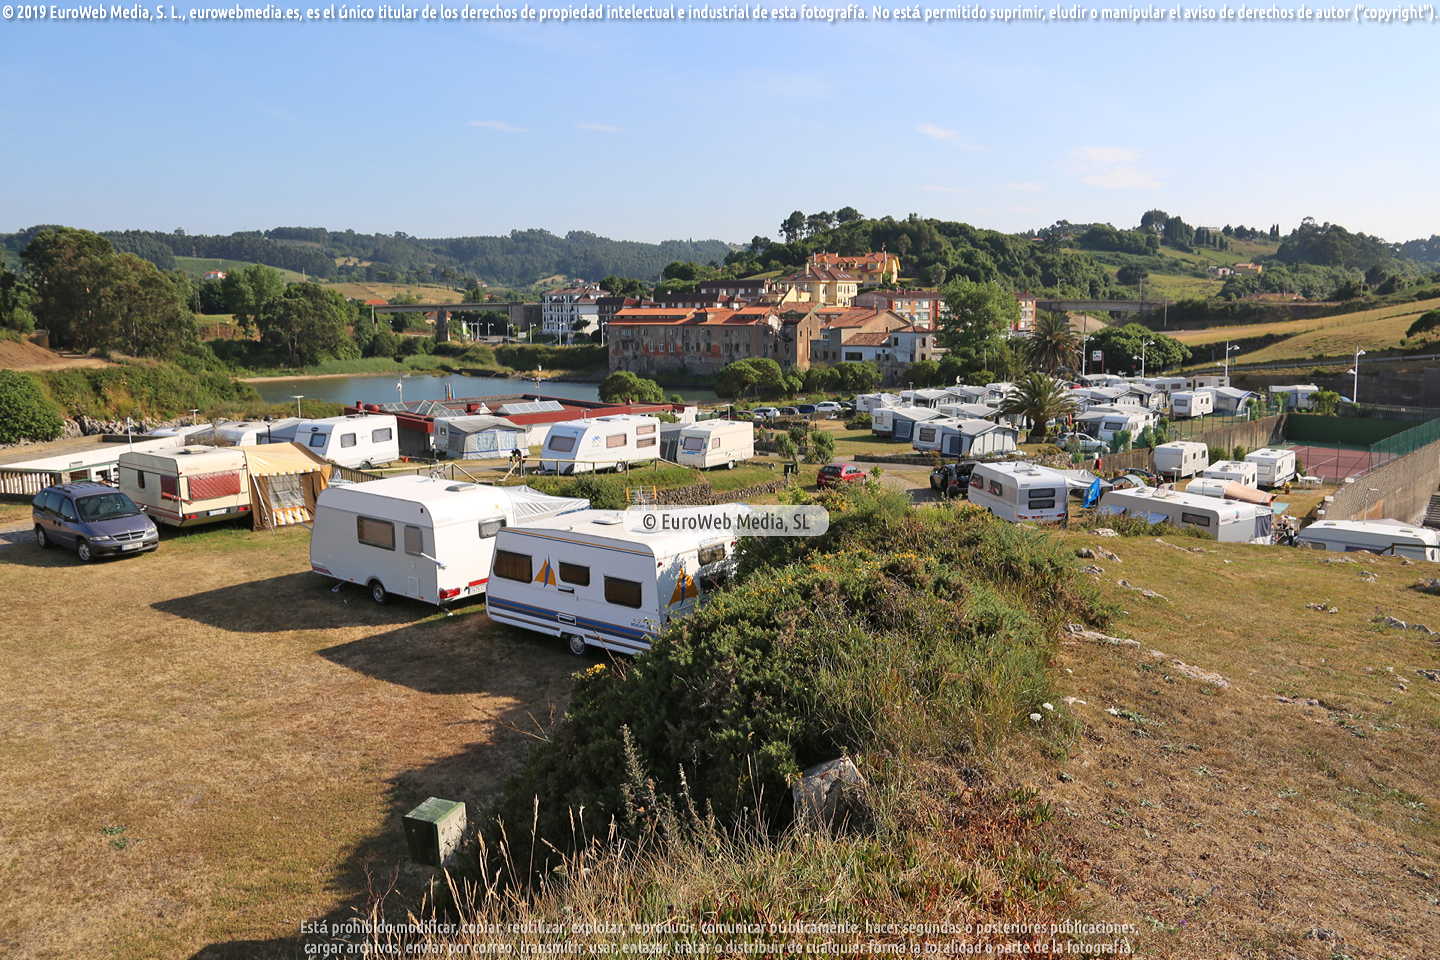 Camping Perlora - Zona de acampada